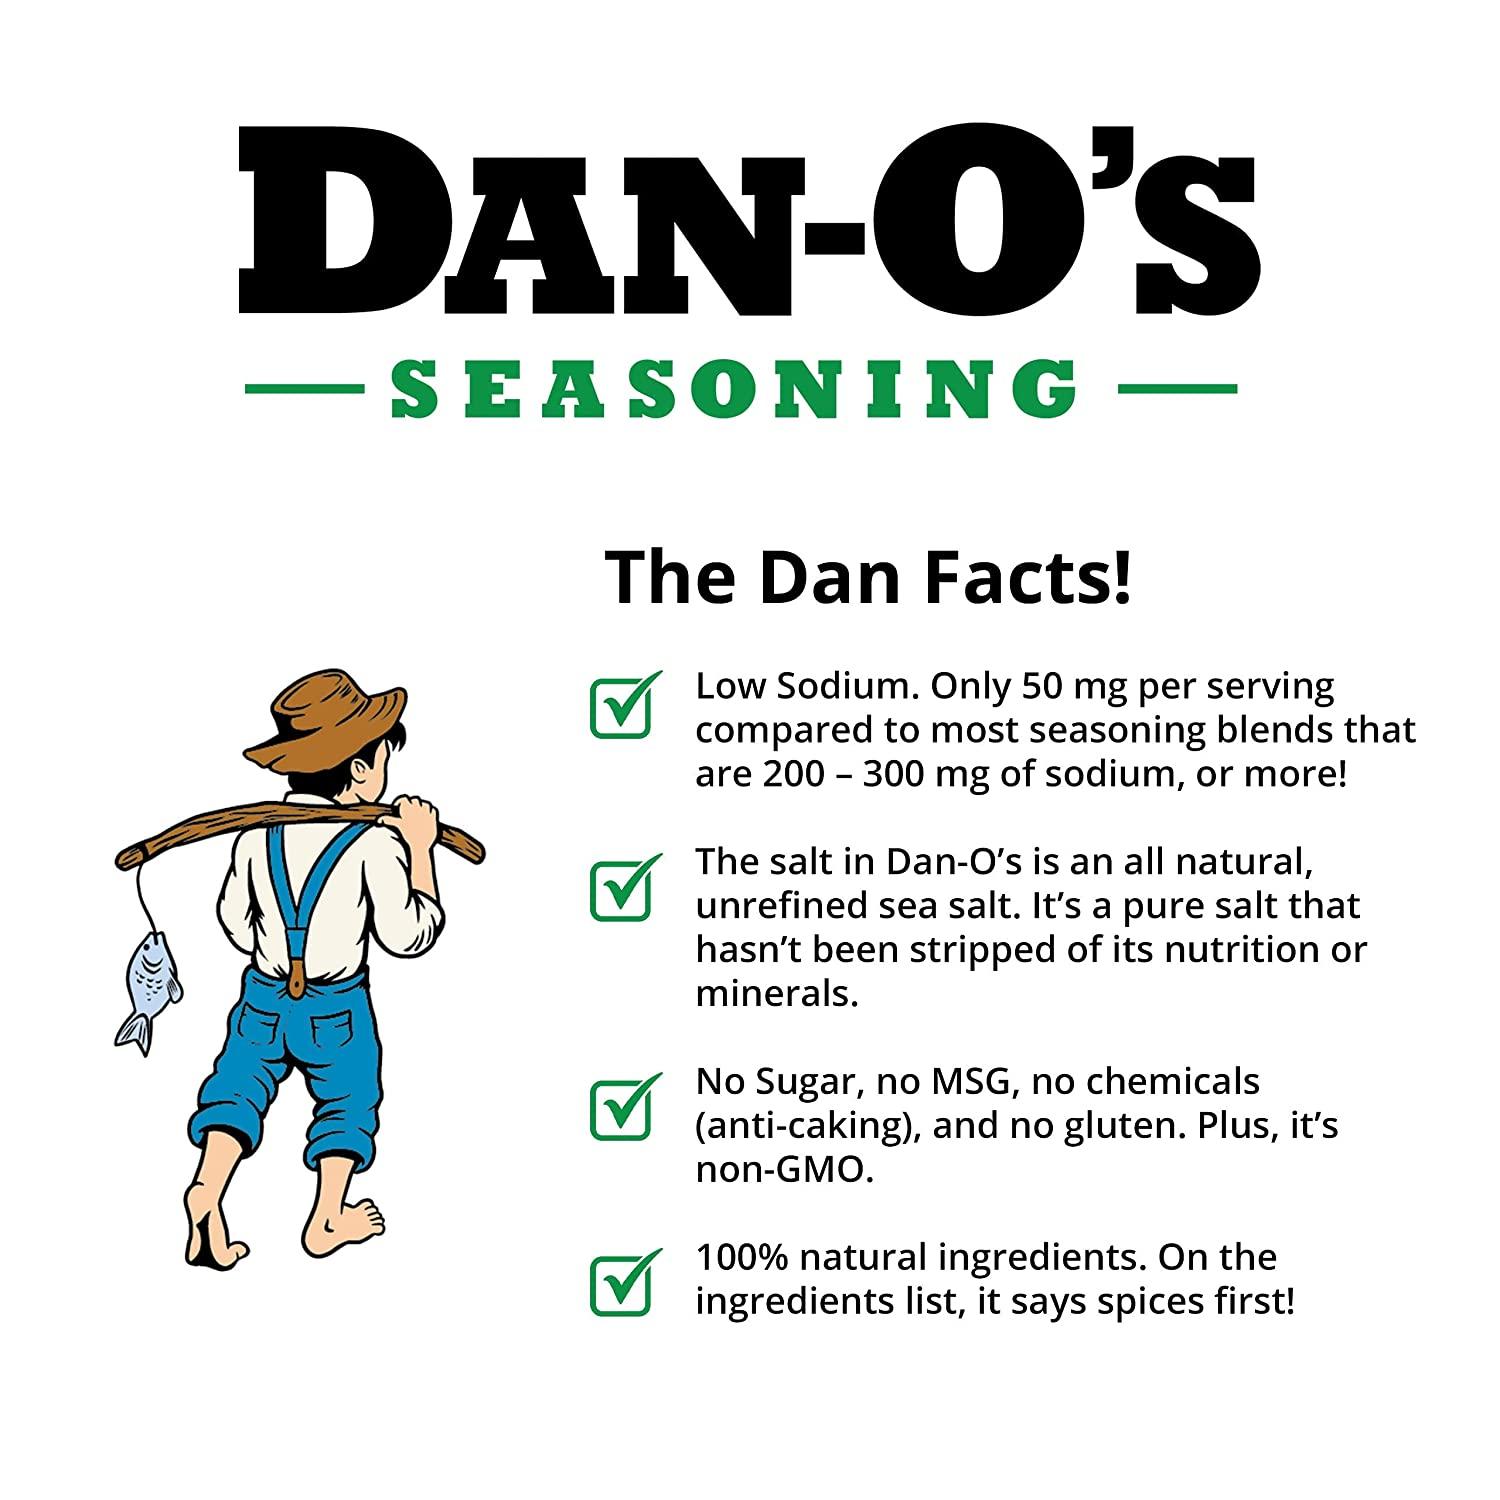 A year's worth of Dan-O's seasoning